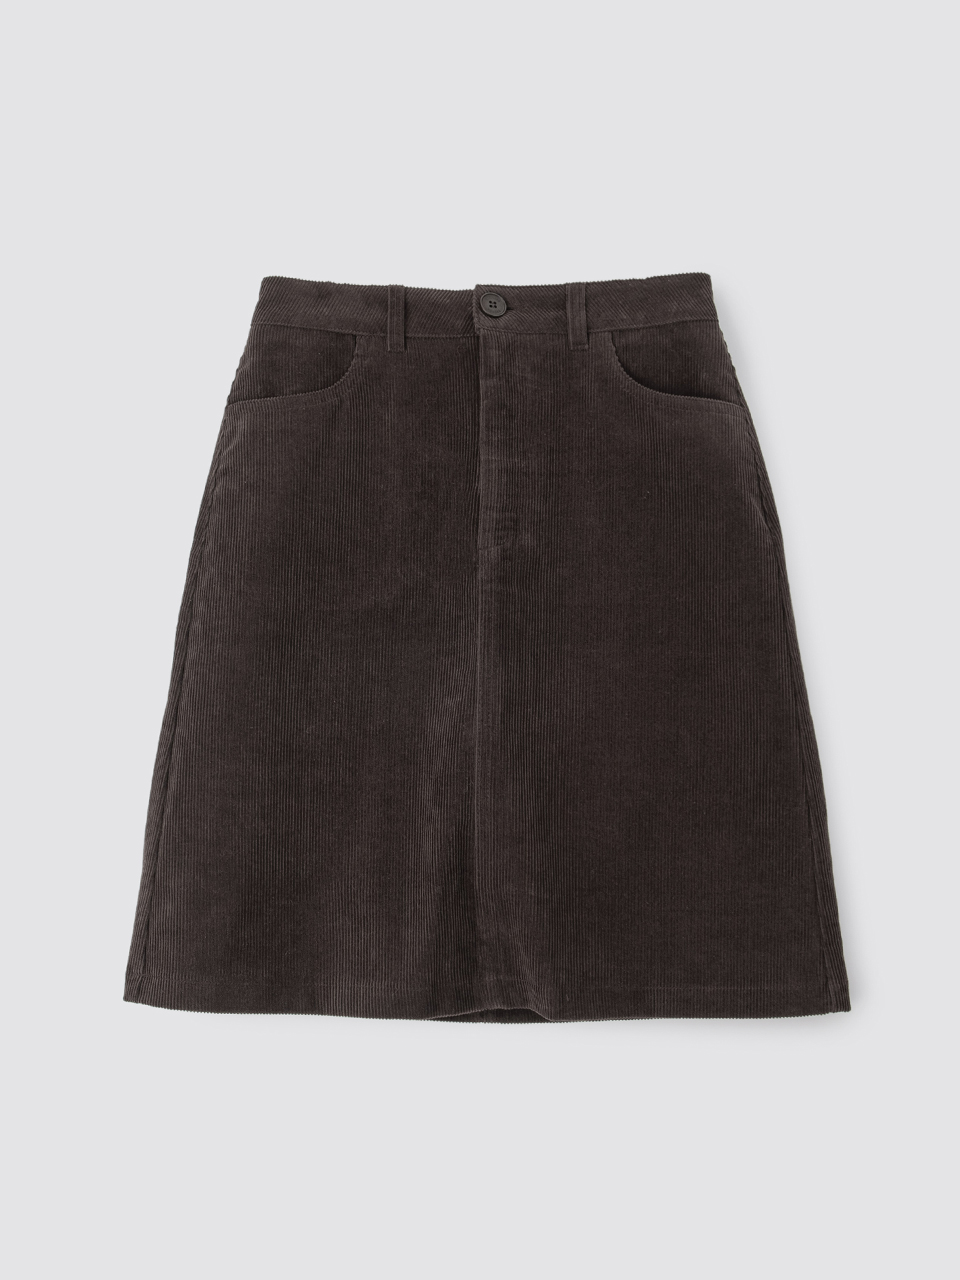 corduroy middle skirt - brownBRENDA BRENDEN